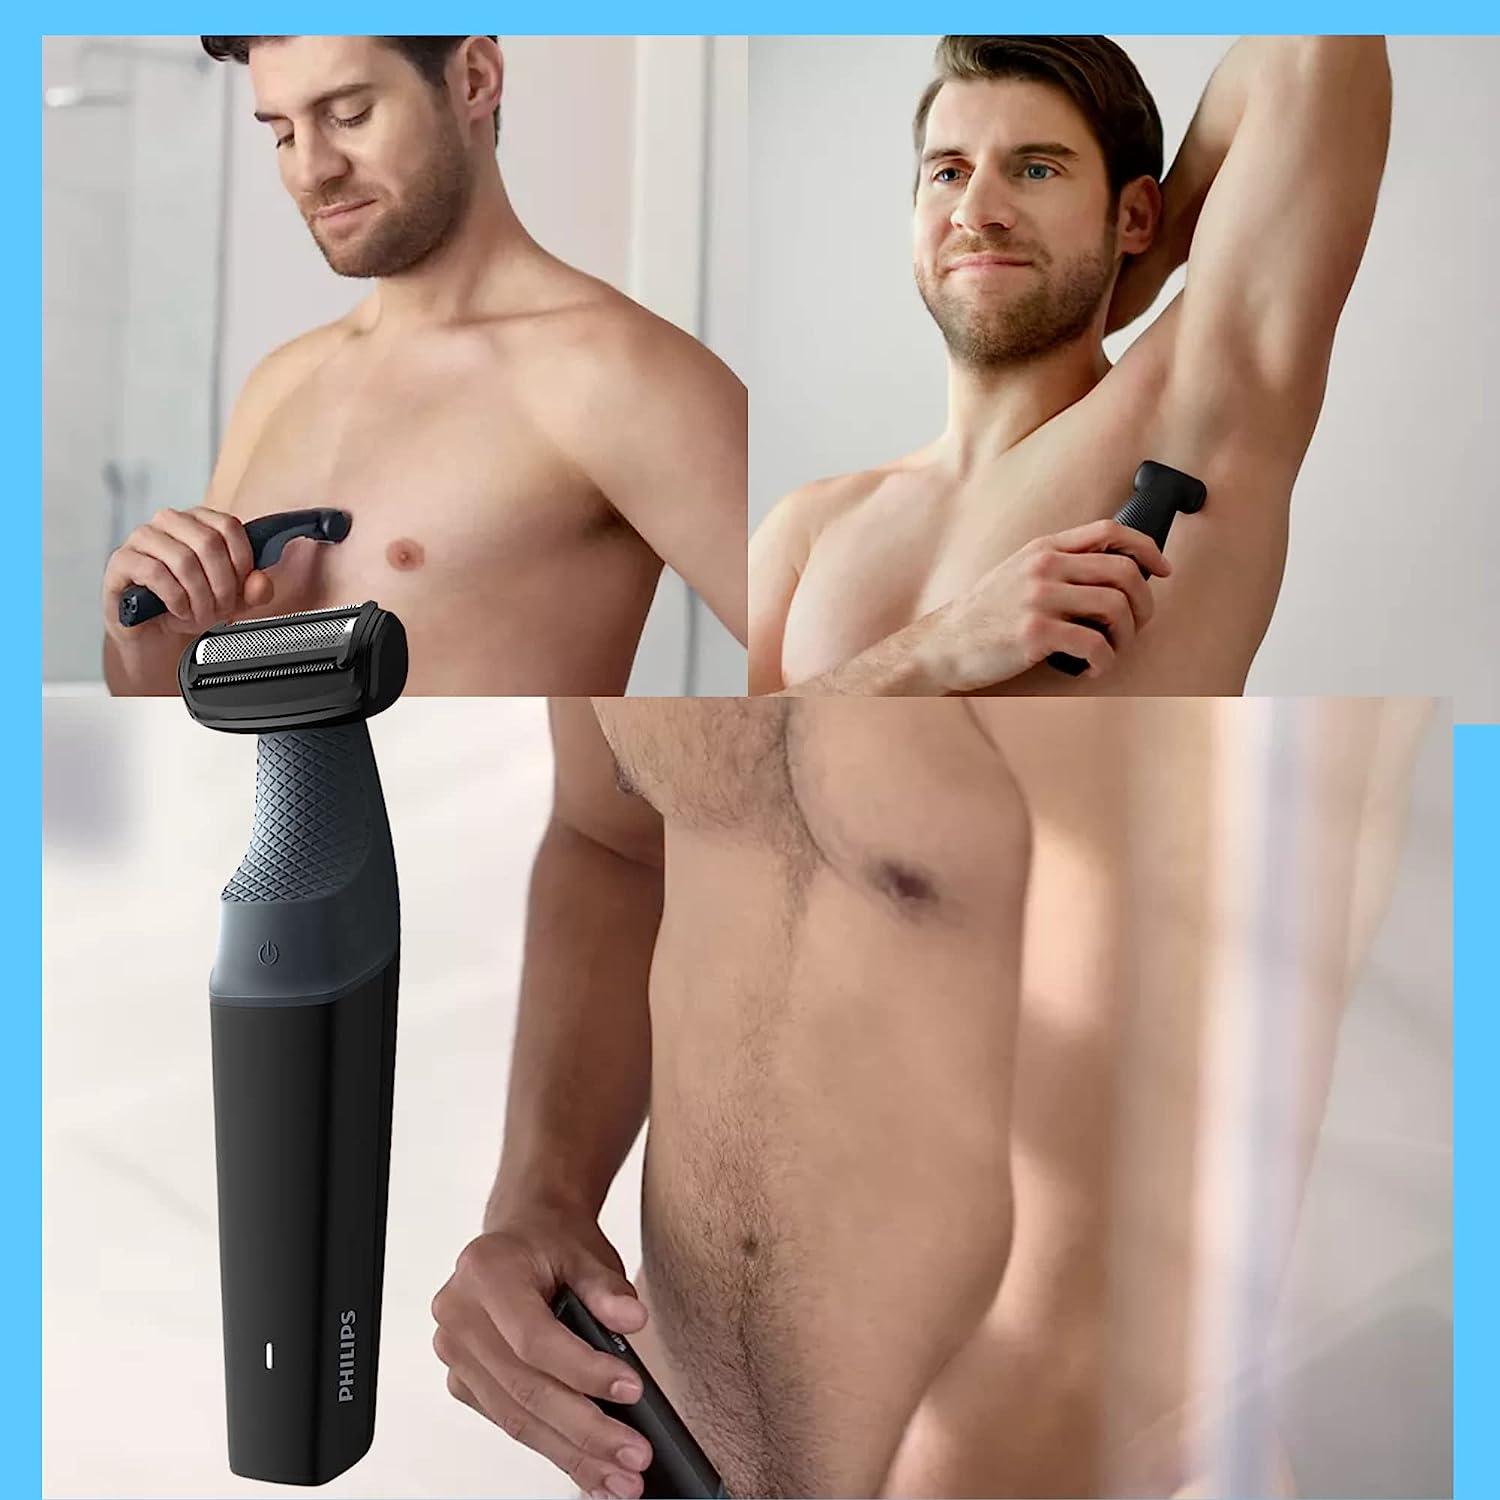 Showerproof body groomer